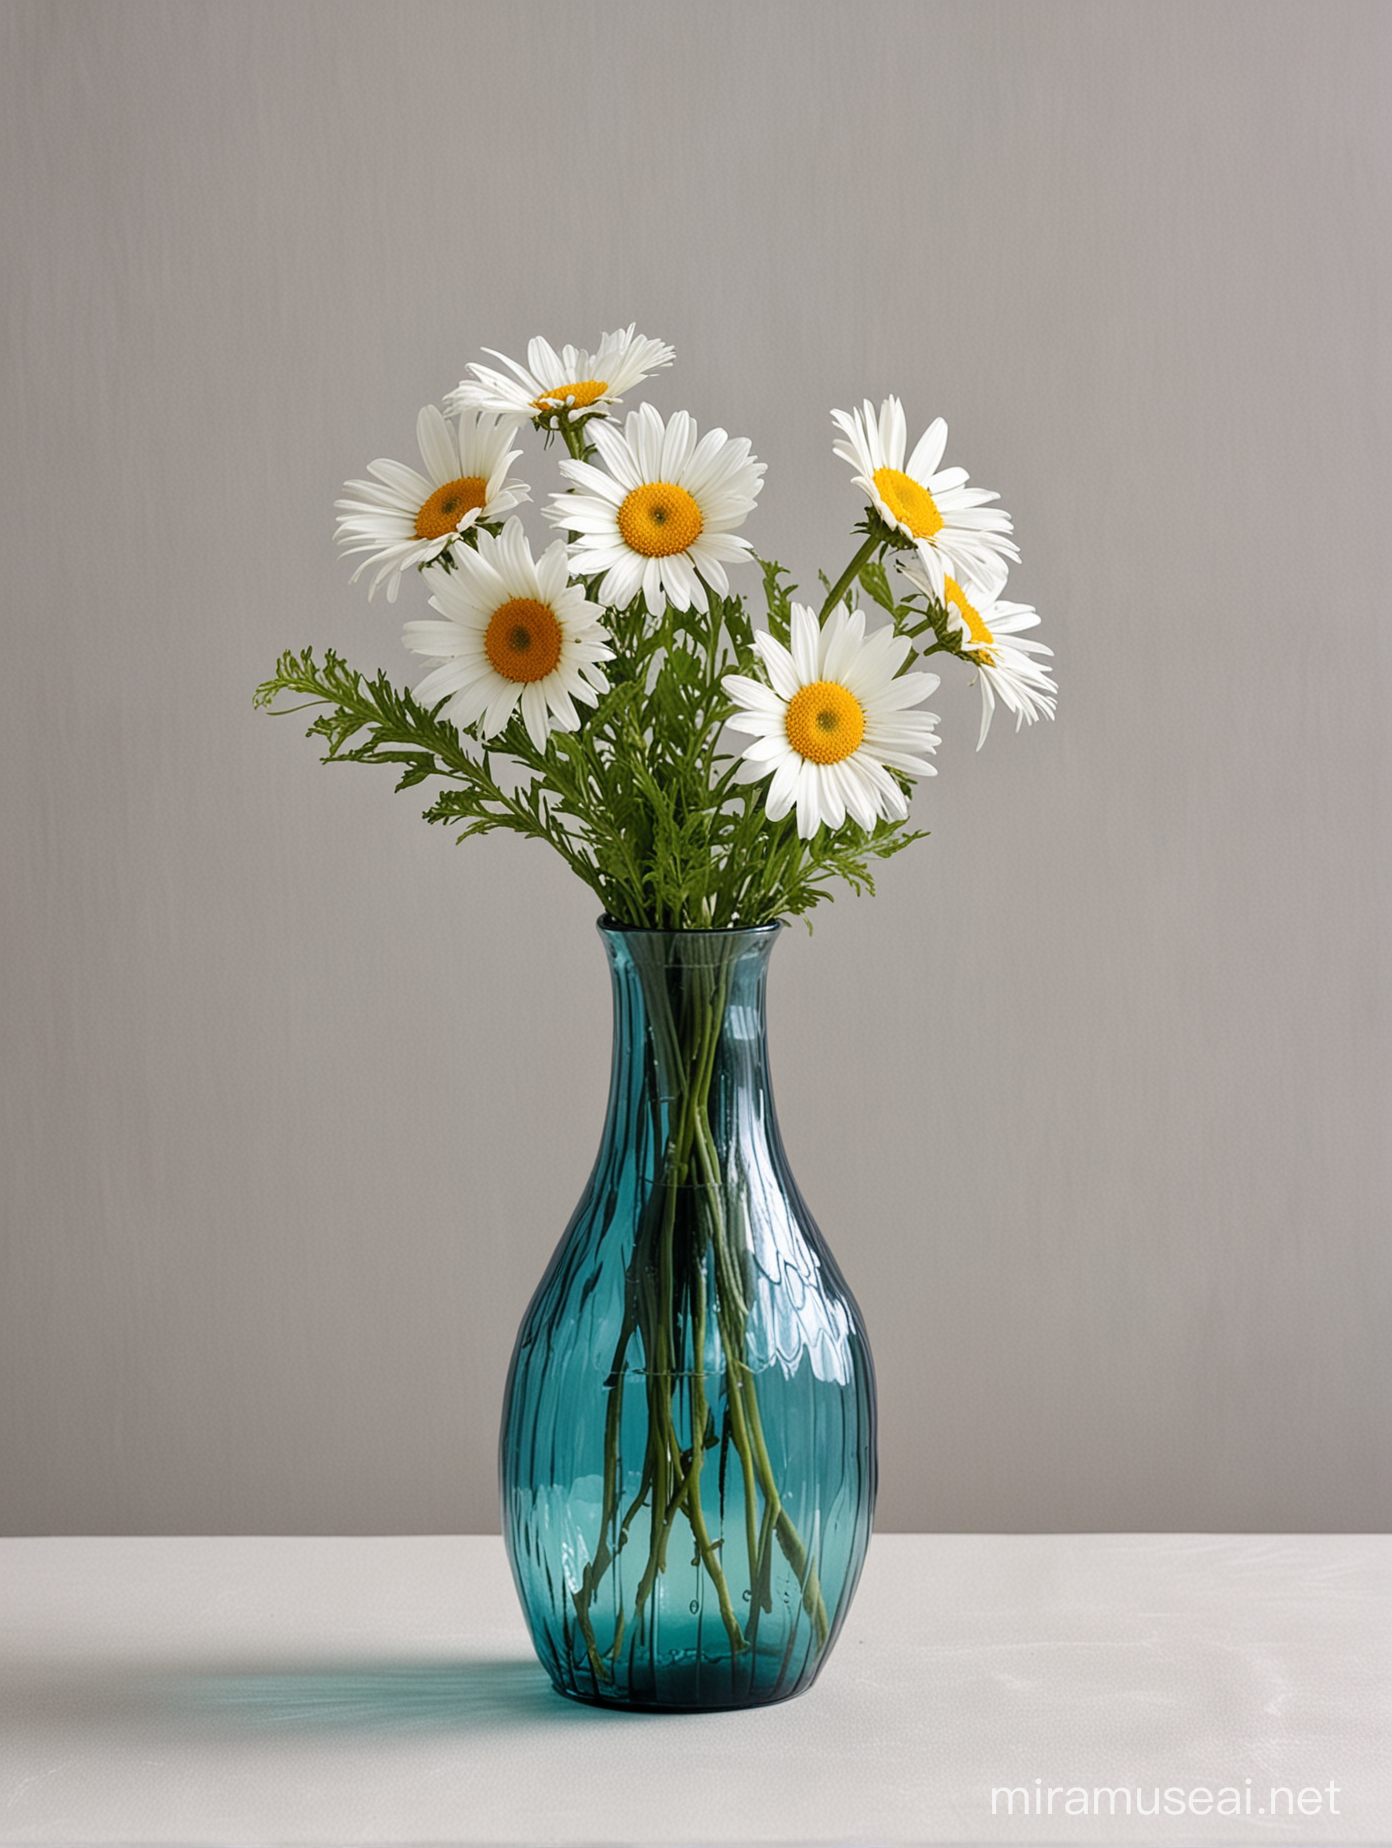 Vibrant MultiColored Daisy Arrangement in Stylish Decorative BluishGreen Glass Vase with Drapery